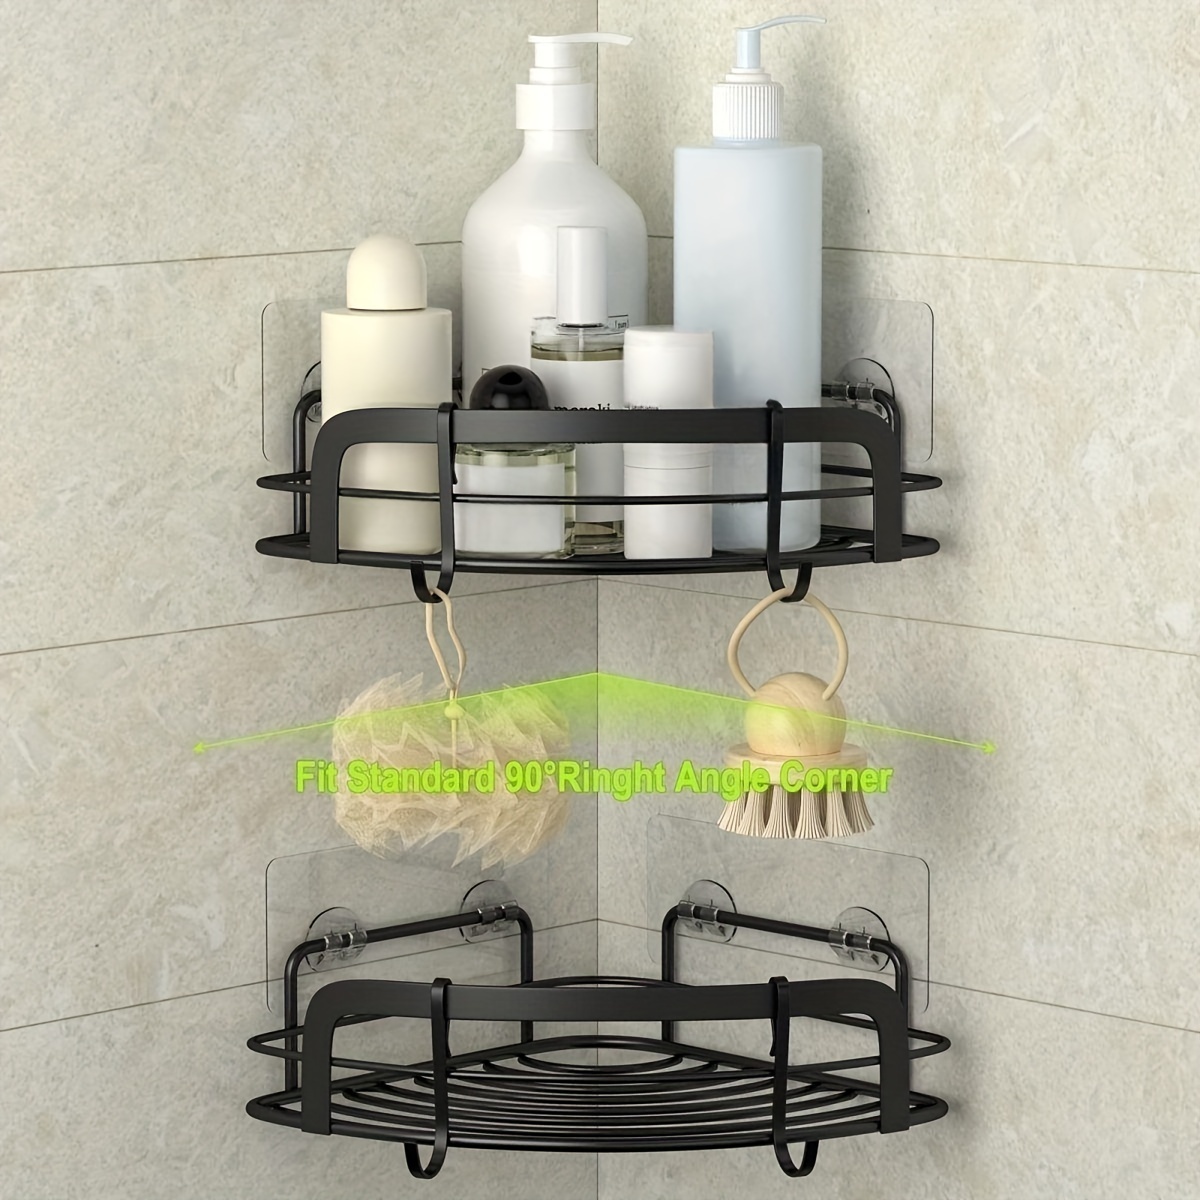 stusgo Corner Shower Caddy, Shower Shelf, Adhesive Shower Wall